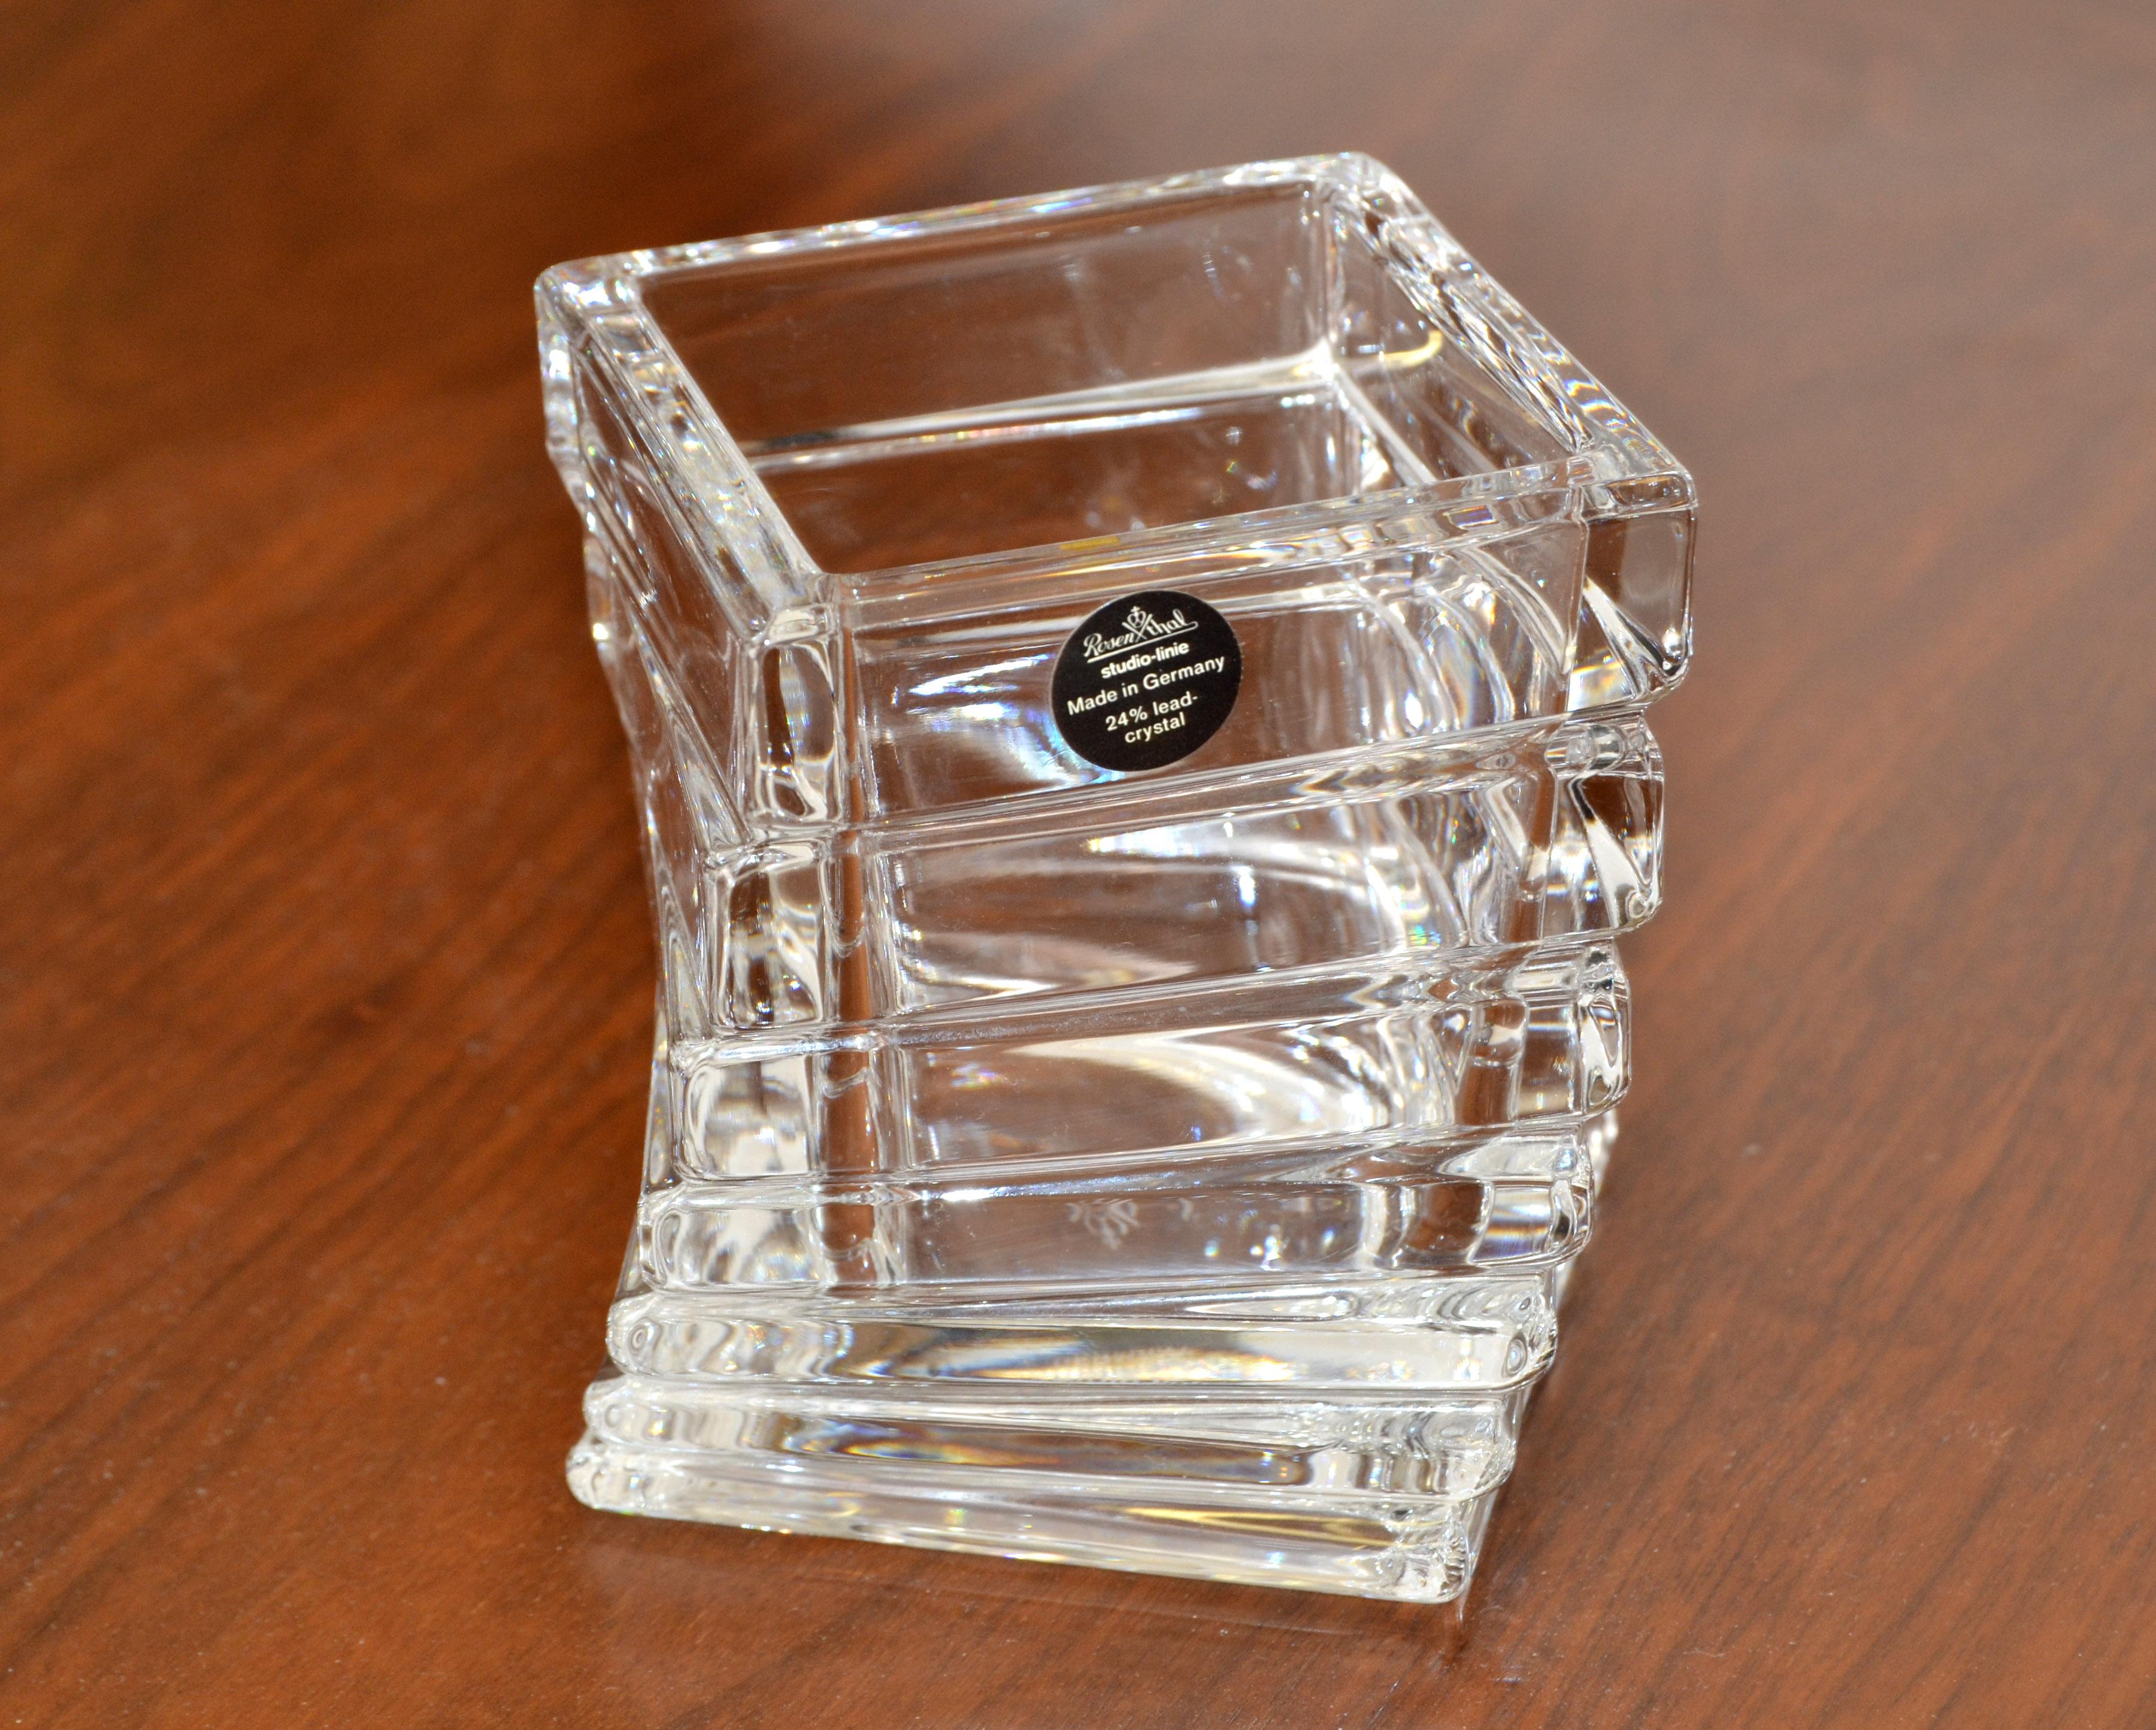 Striking original Rosenthal Turnus Geometric Lead crystal glass vase, Vessel by Rosenthal Studio Line made in Germany. 
Marked with black foil label Rosenthal classic, 24% lead-crystal and stamped at the base.